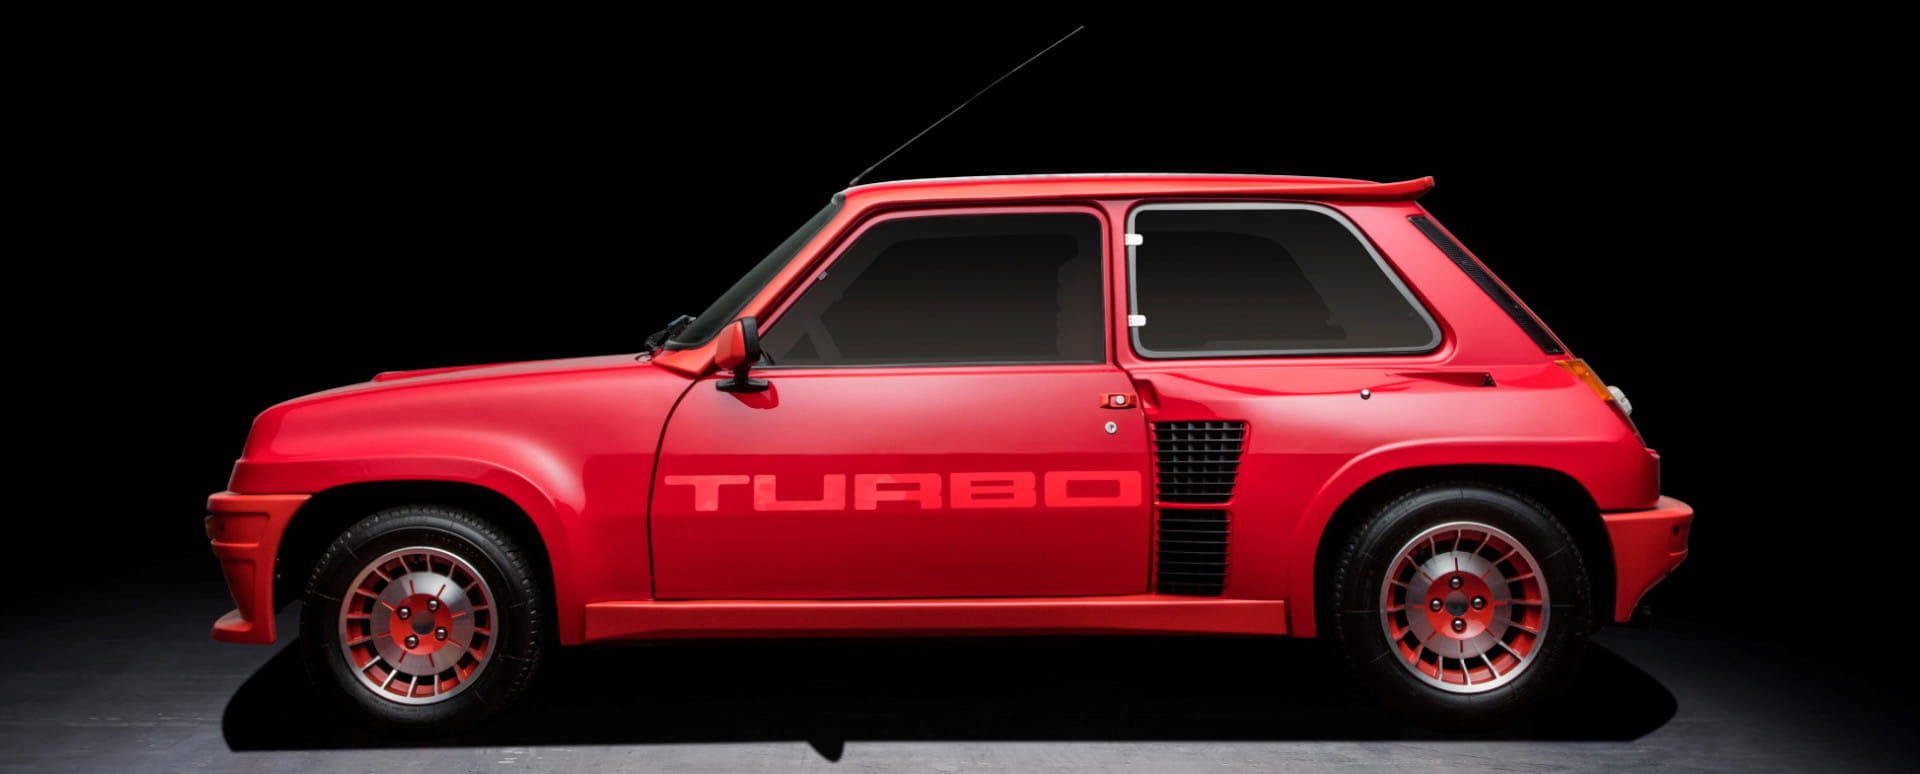 Renault 5 Turbo 